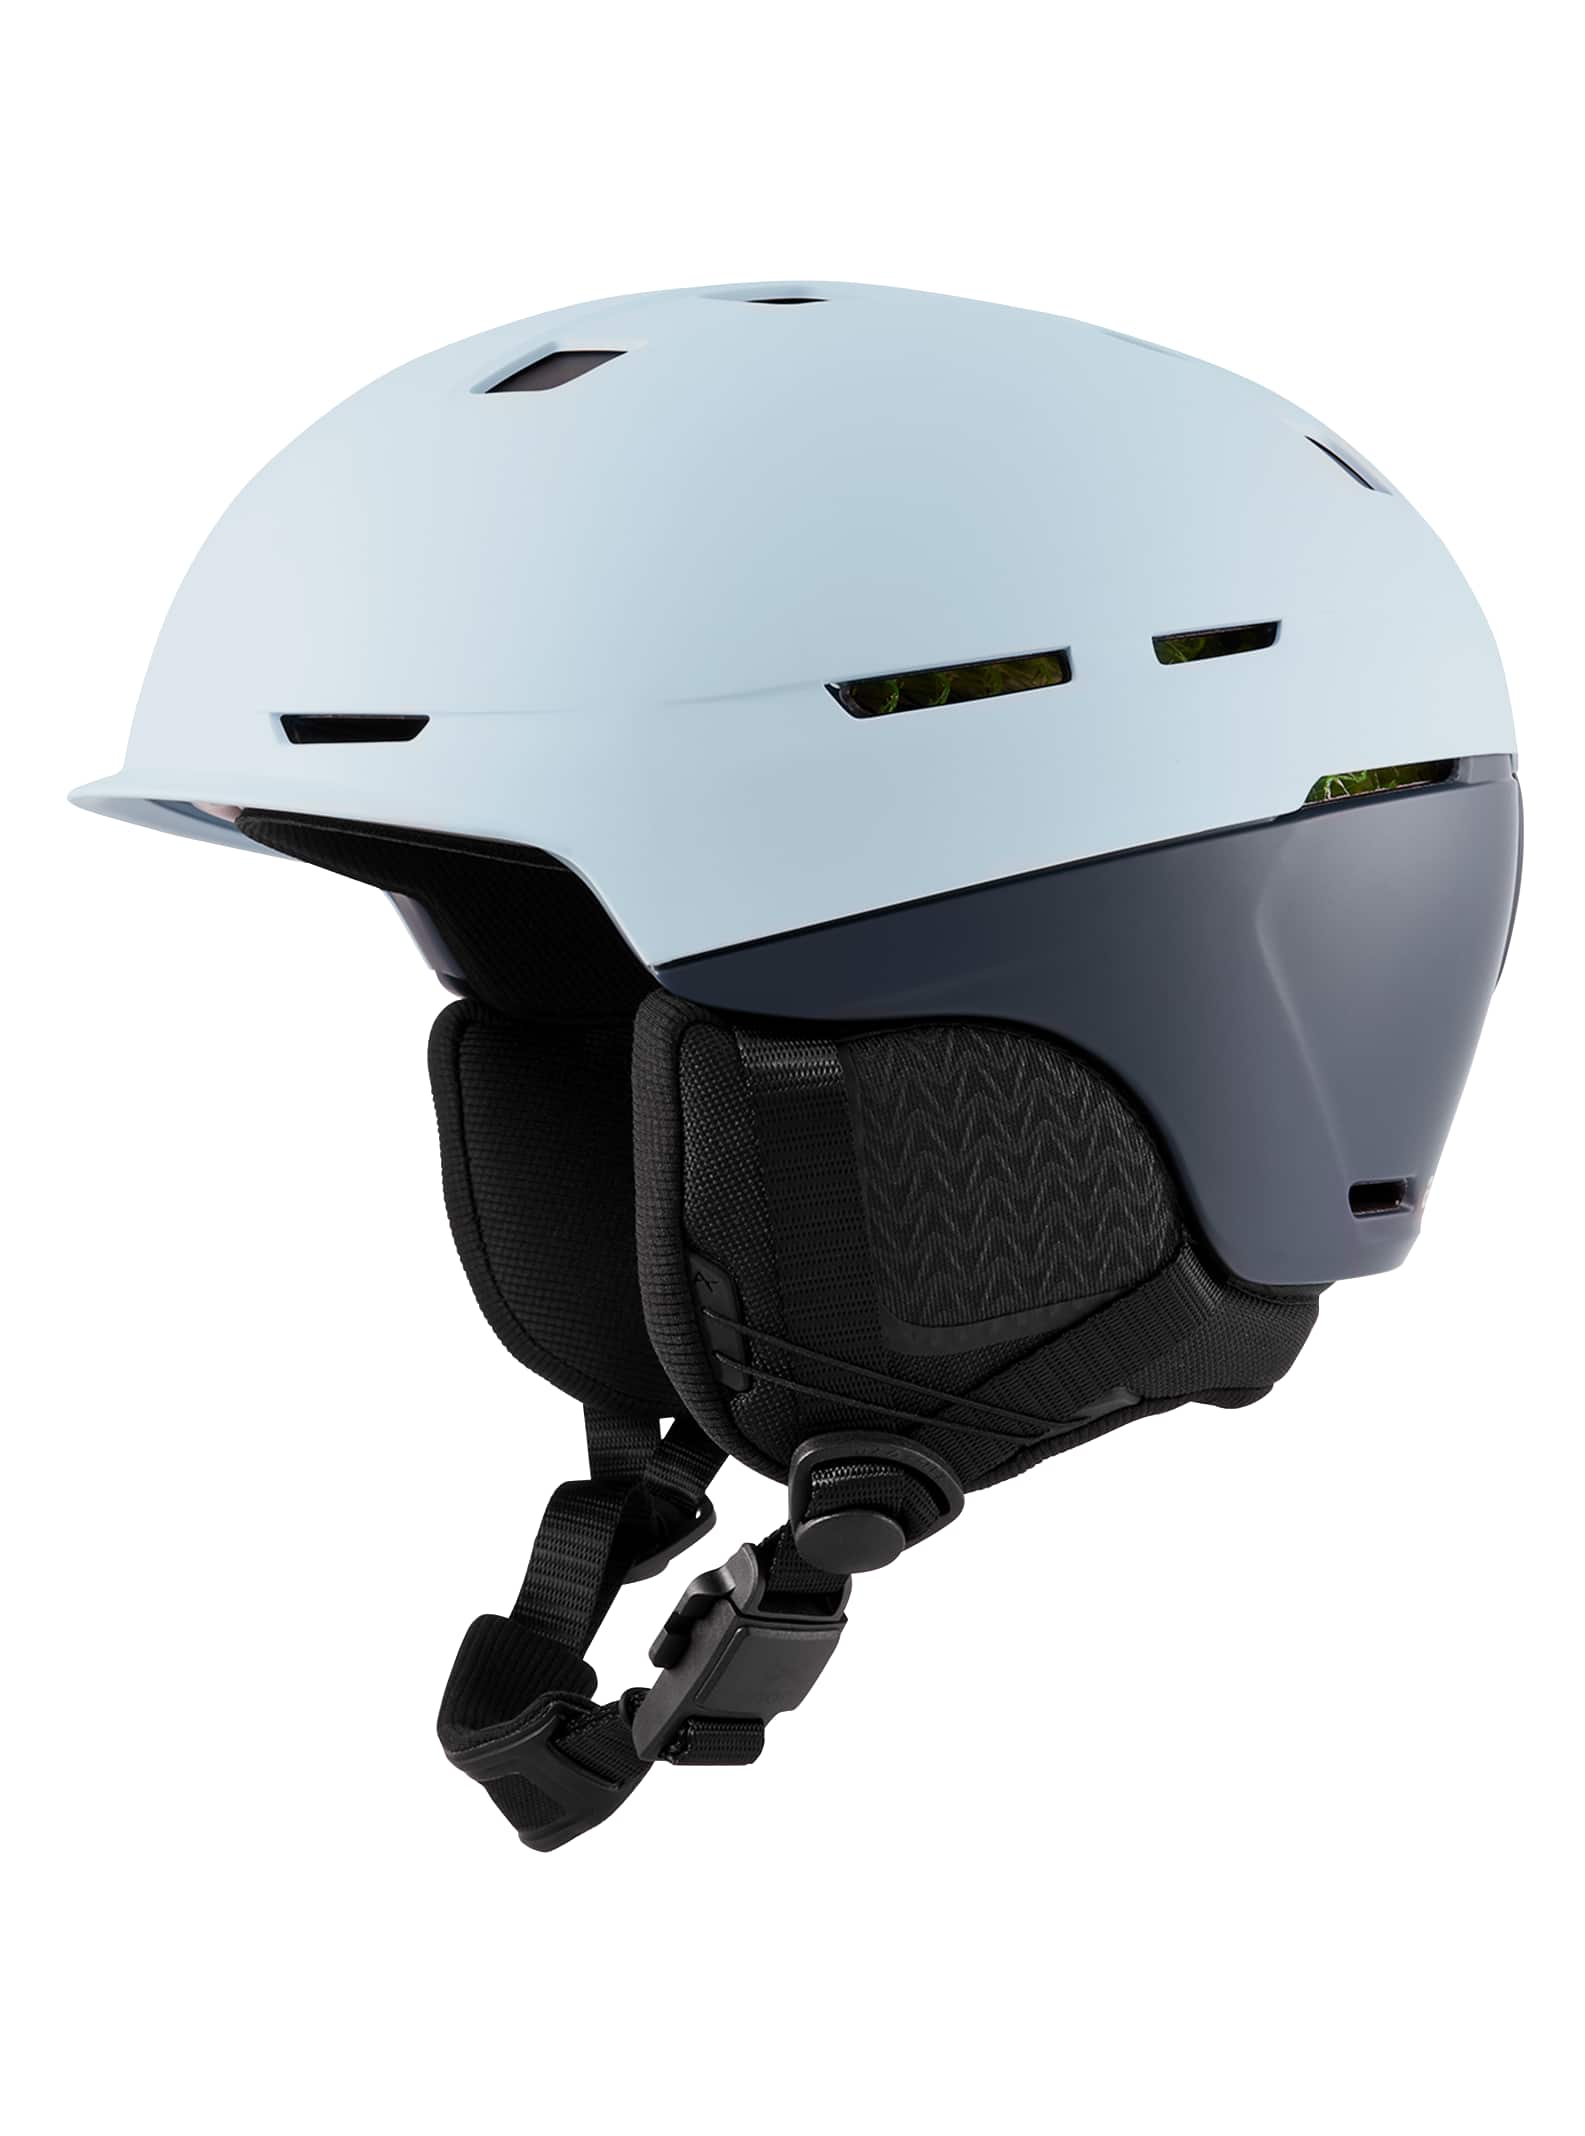 Anon Merak WaveCel Helmet | Burton.com Winter 2022 US